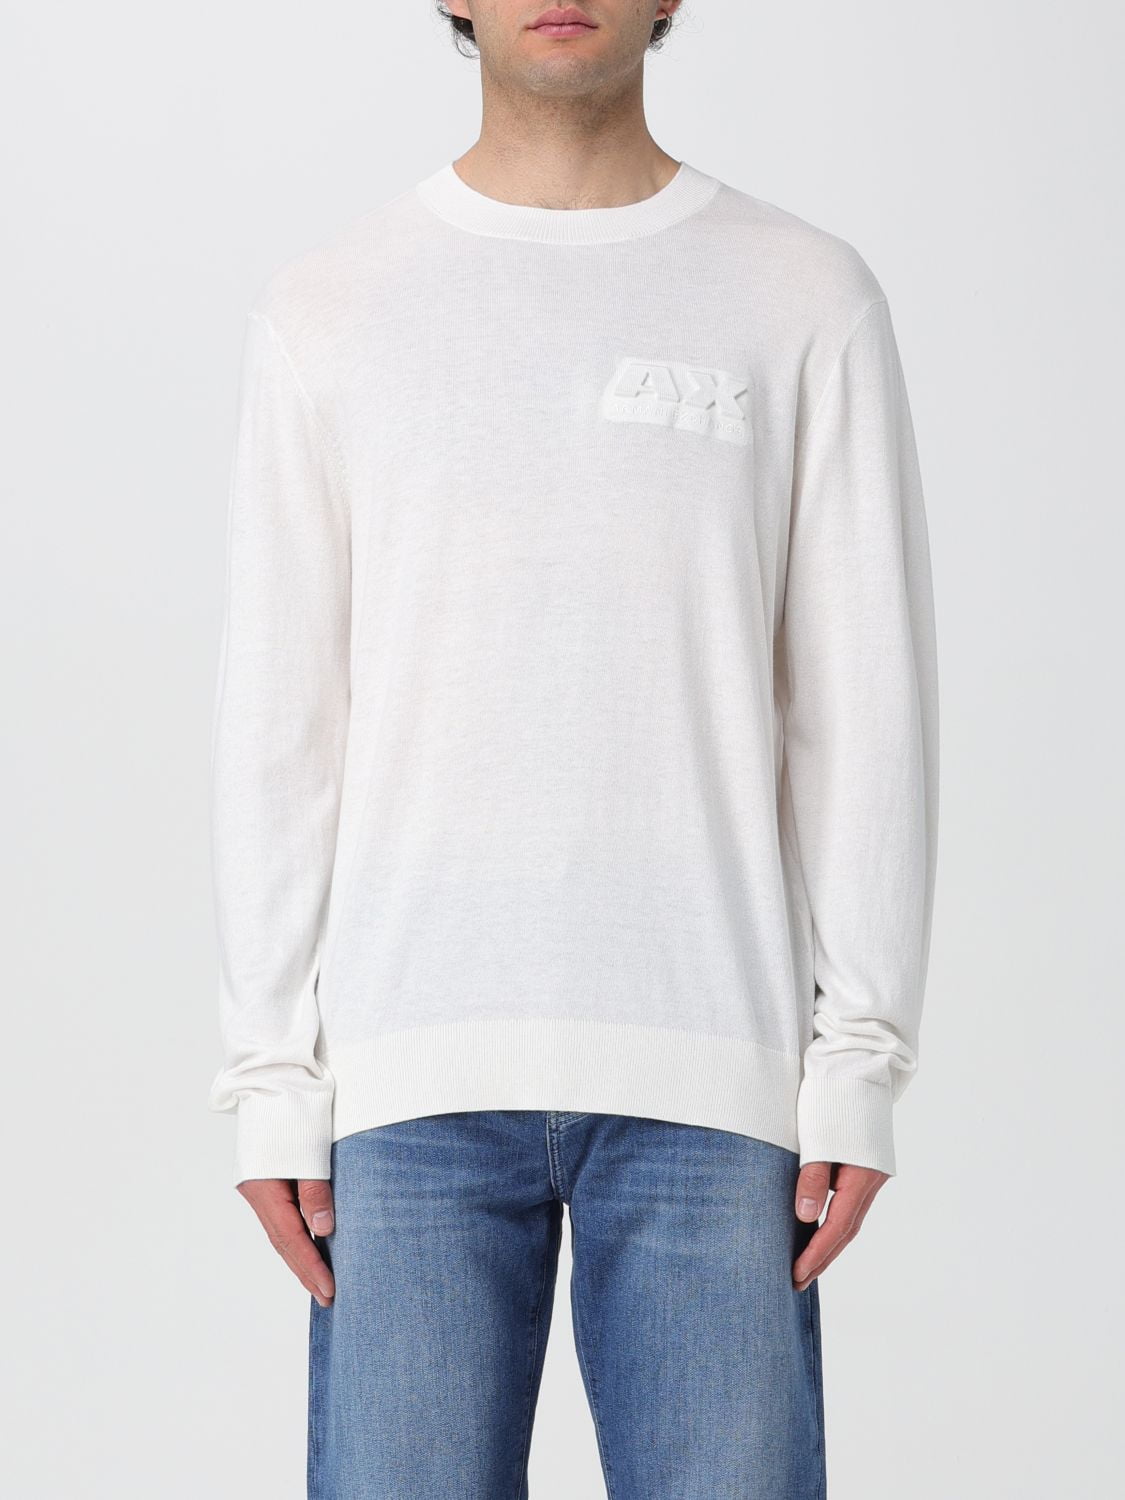 Armani Exchange Sweater Men White Men - Walmart.com